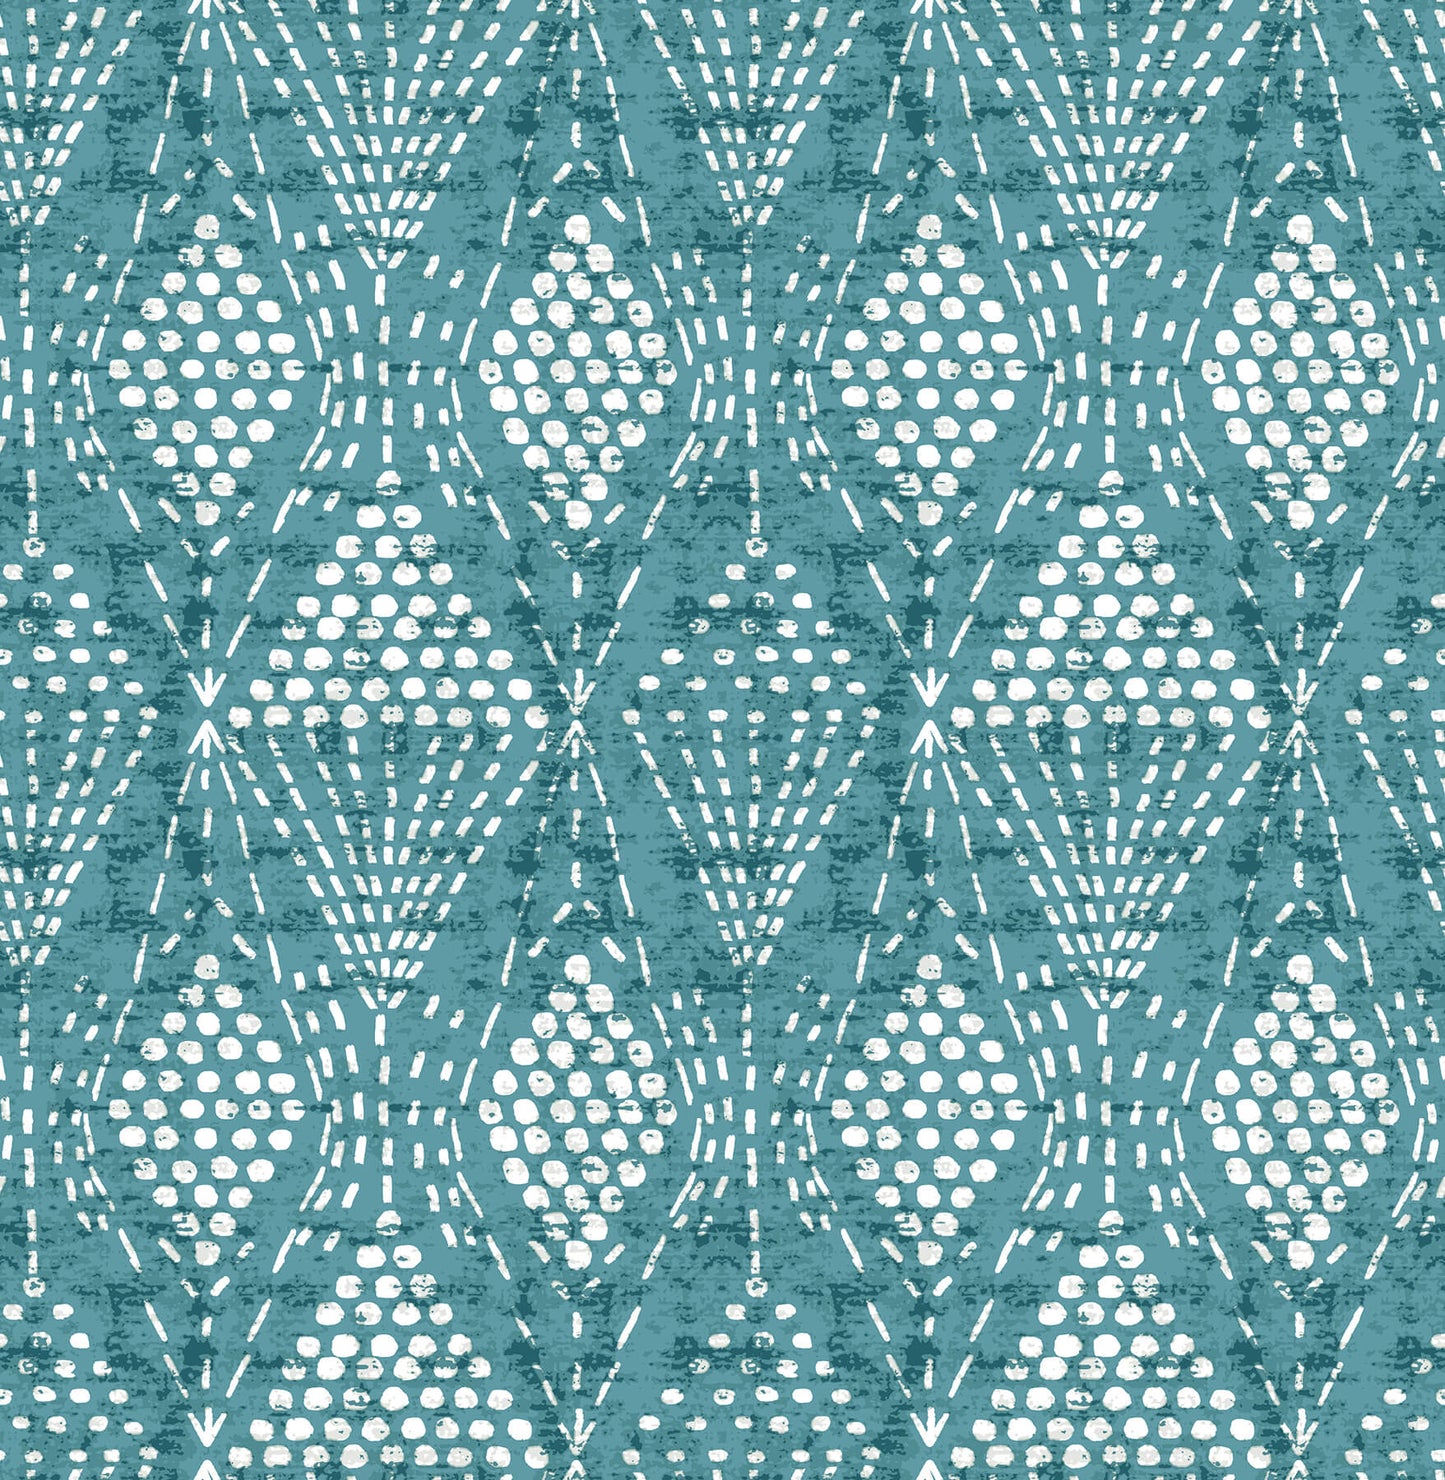 A-Street Prints Happy Grady Geometric Wallpaper - Teal